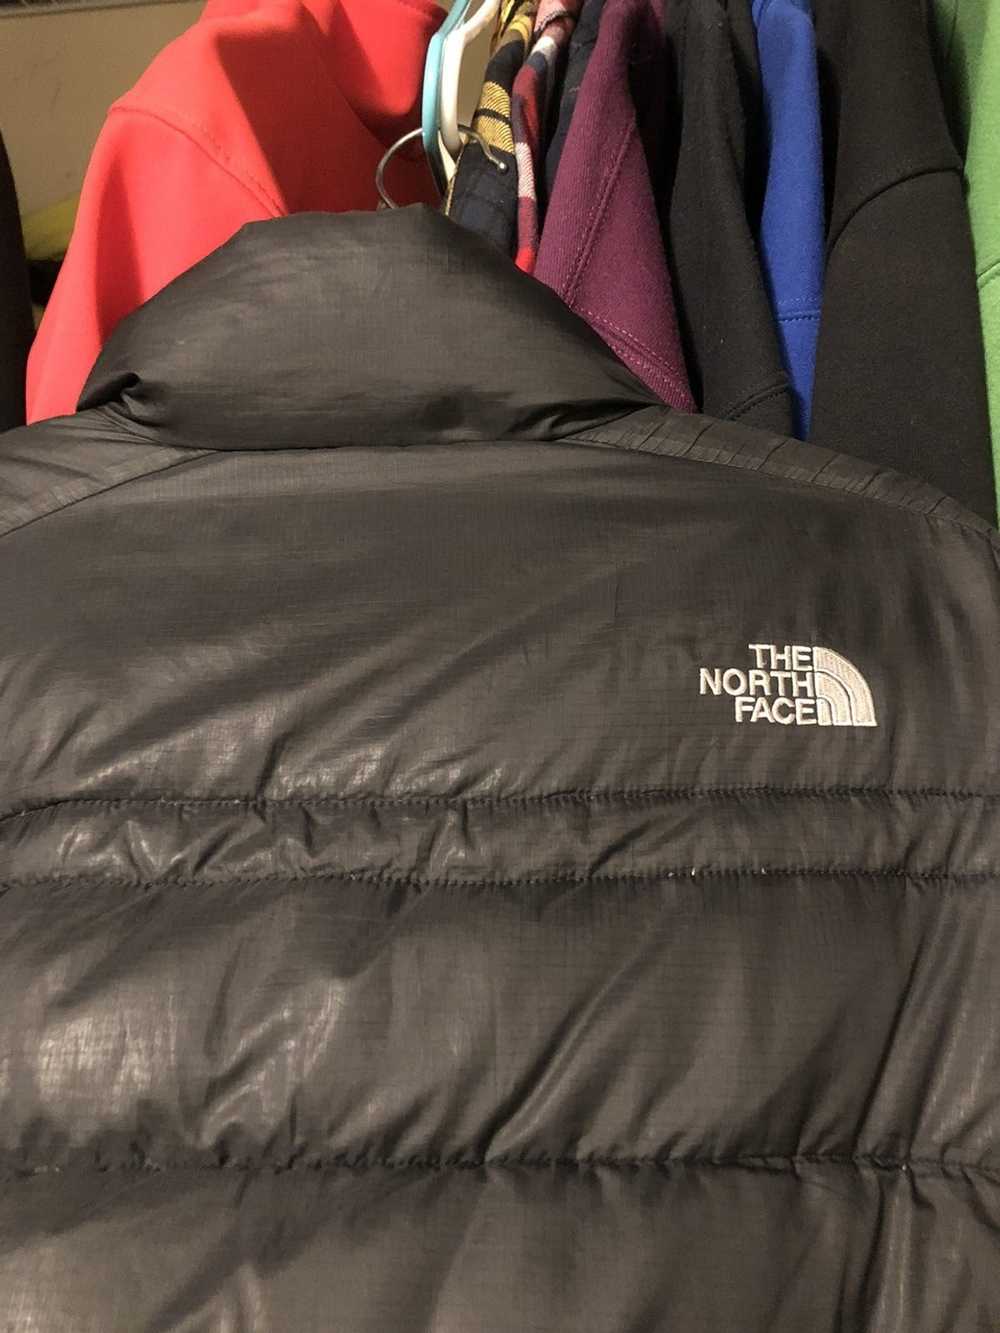 The North Face Like new TNF logo jacket - image 3